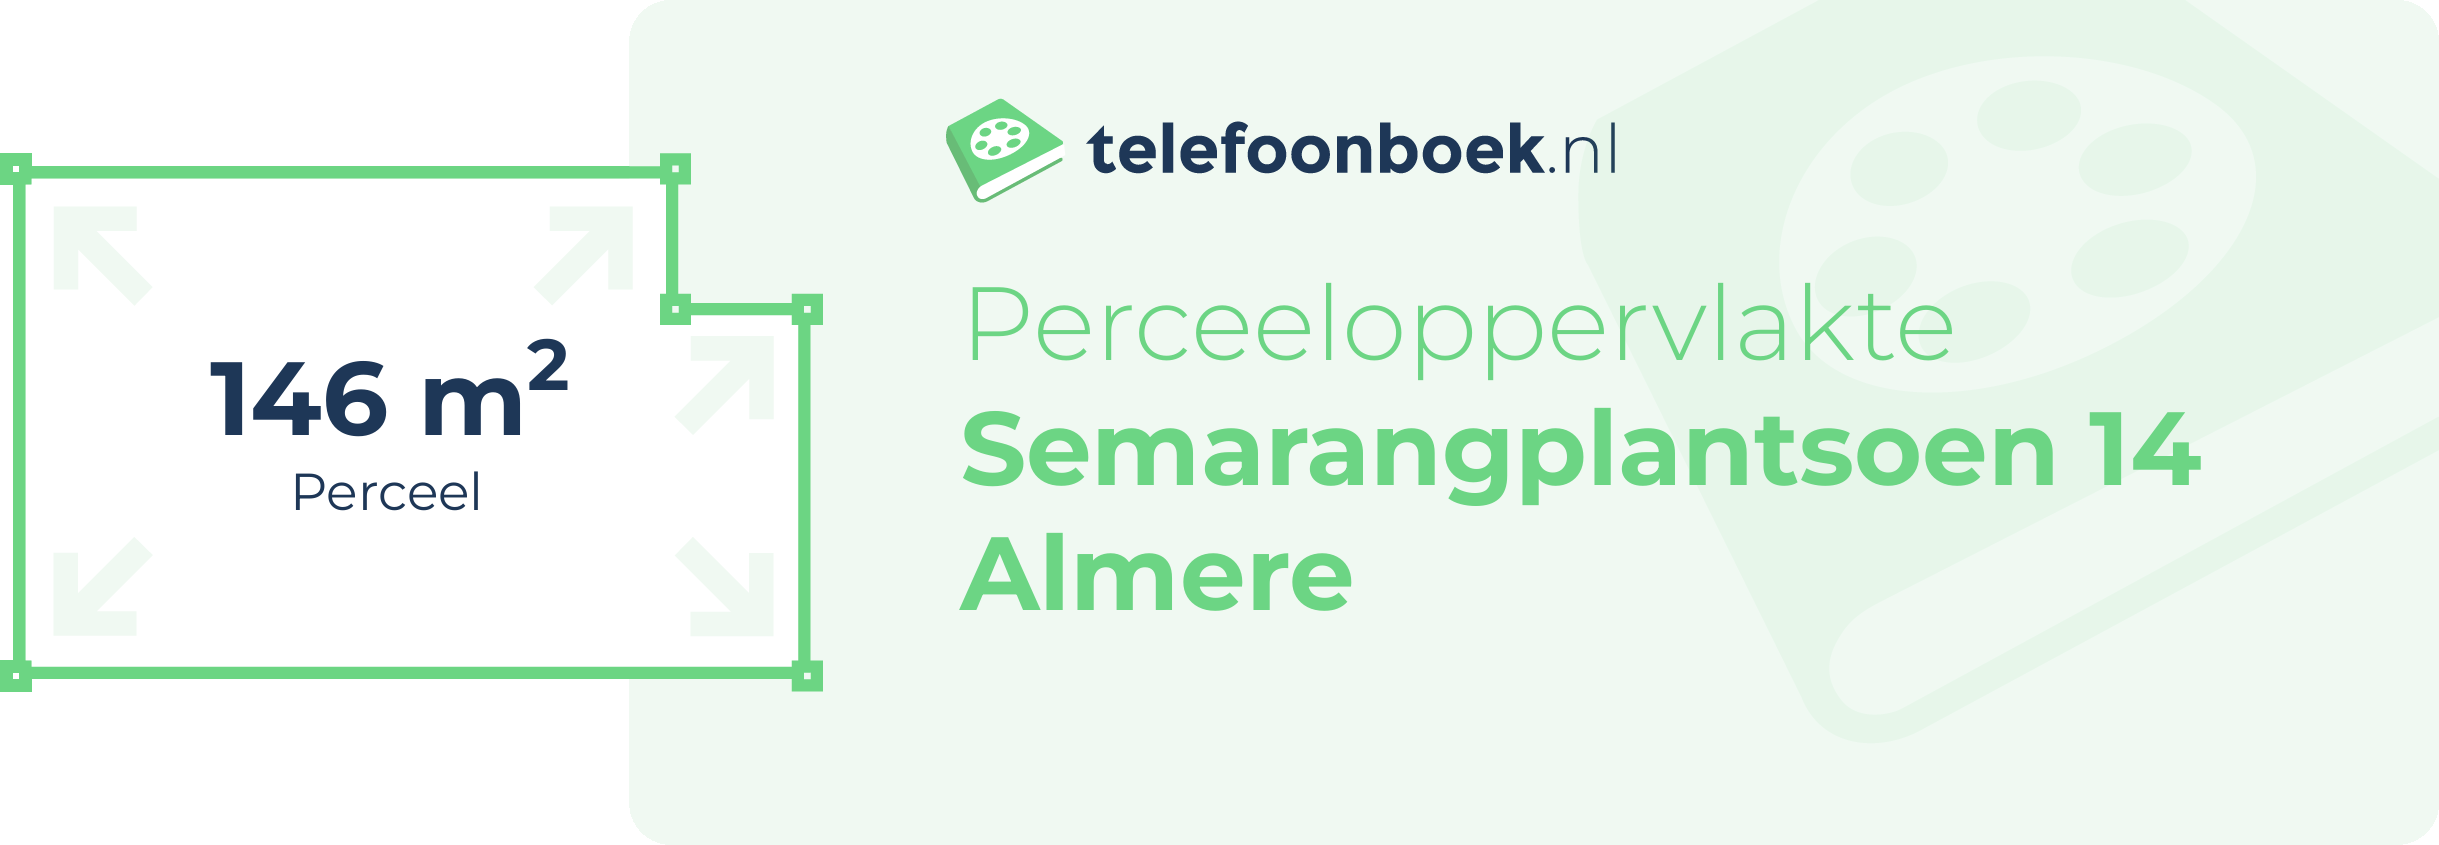 Perceeloppervlakte Semarangplantsoen 14 Almere